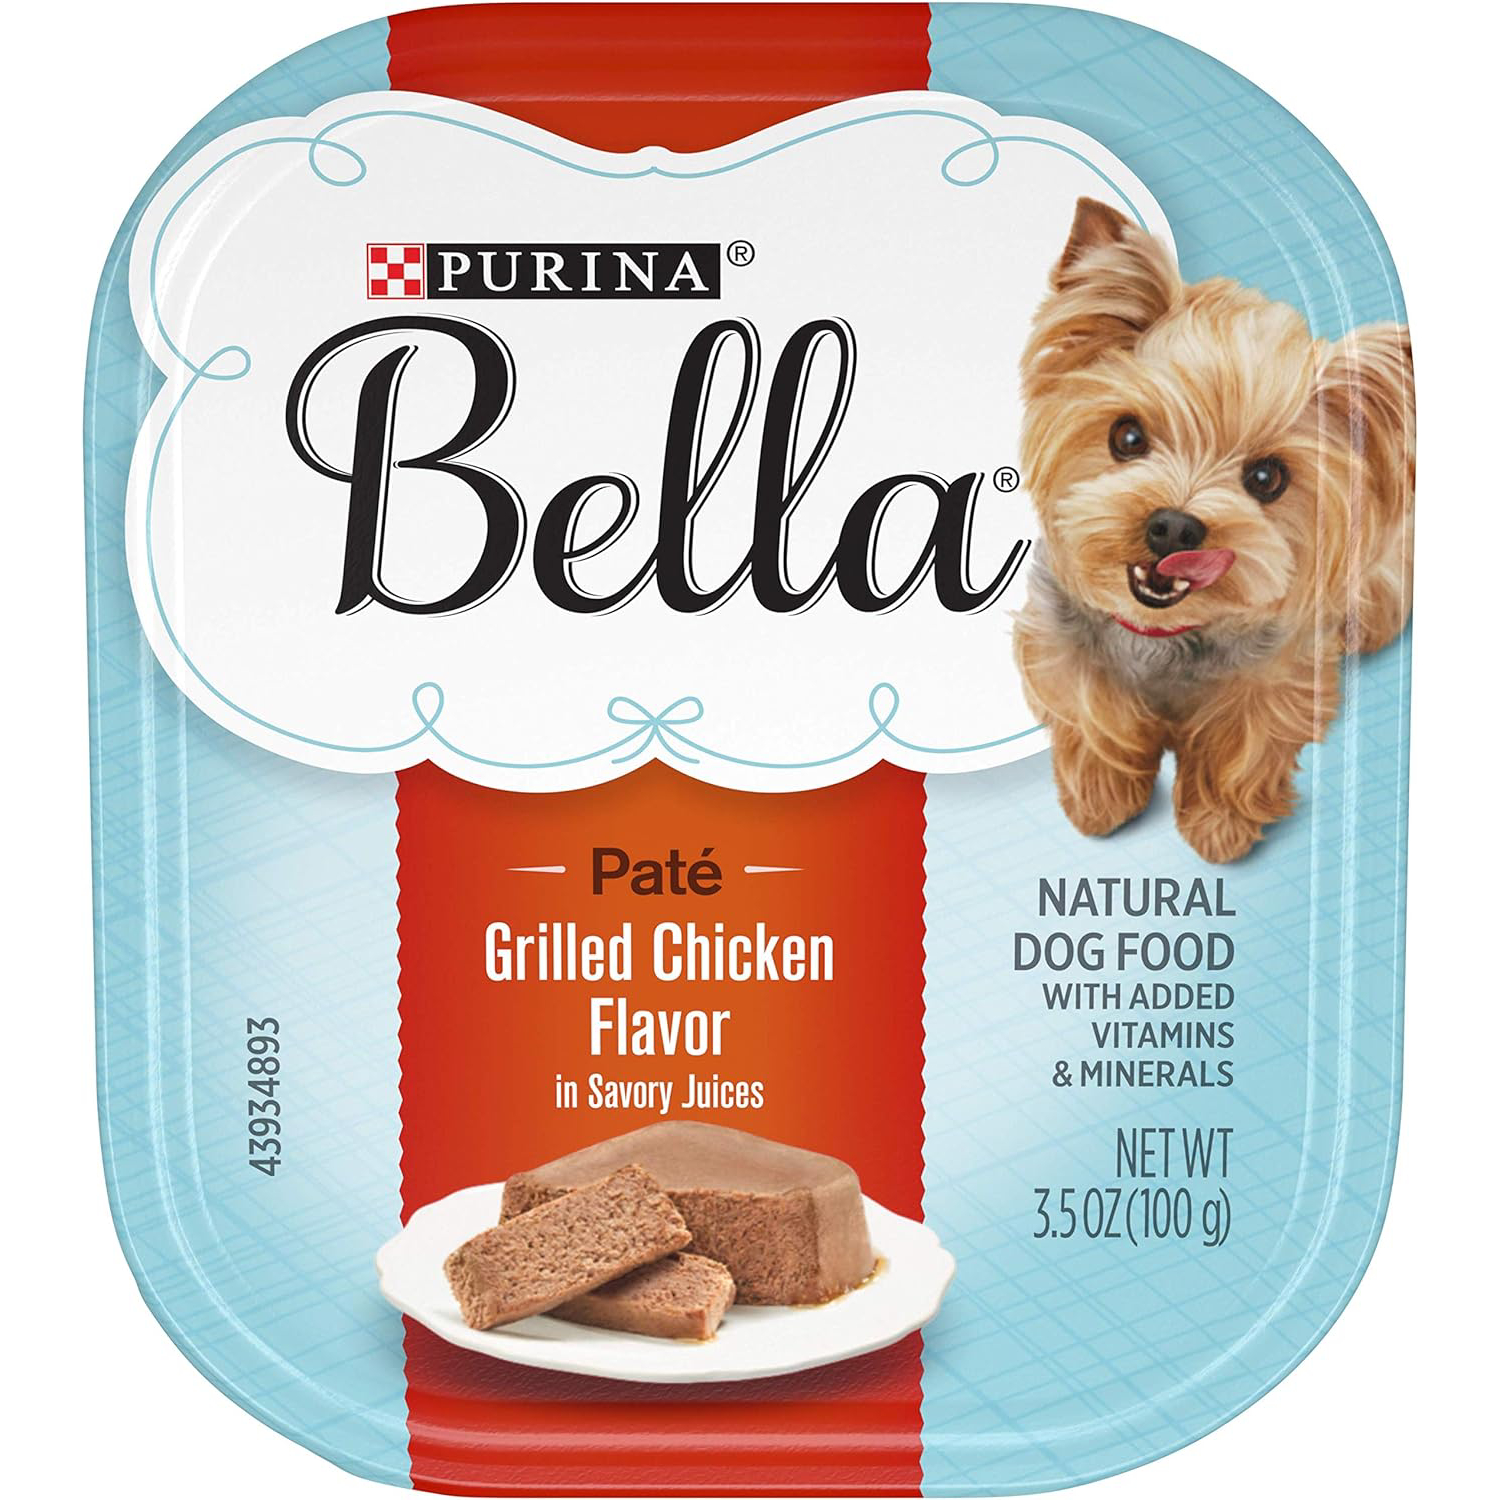 Purina Bella Small Breed Dog Food Trays